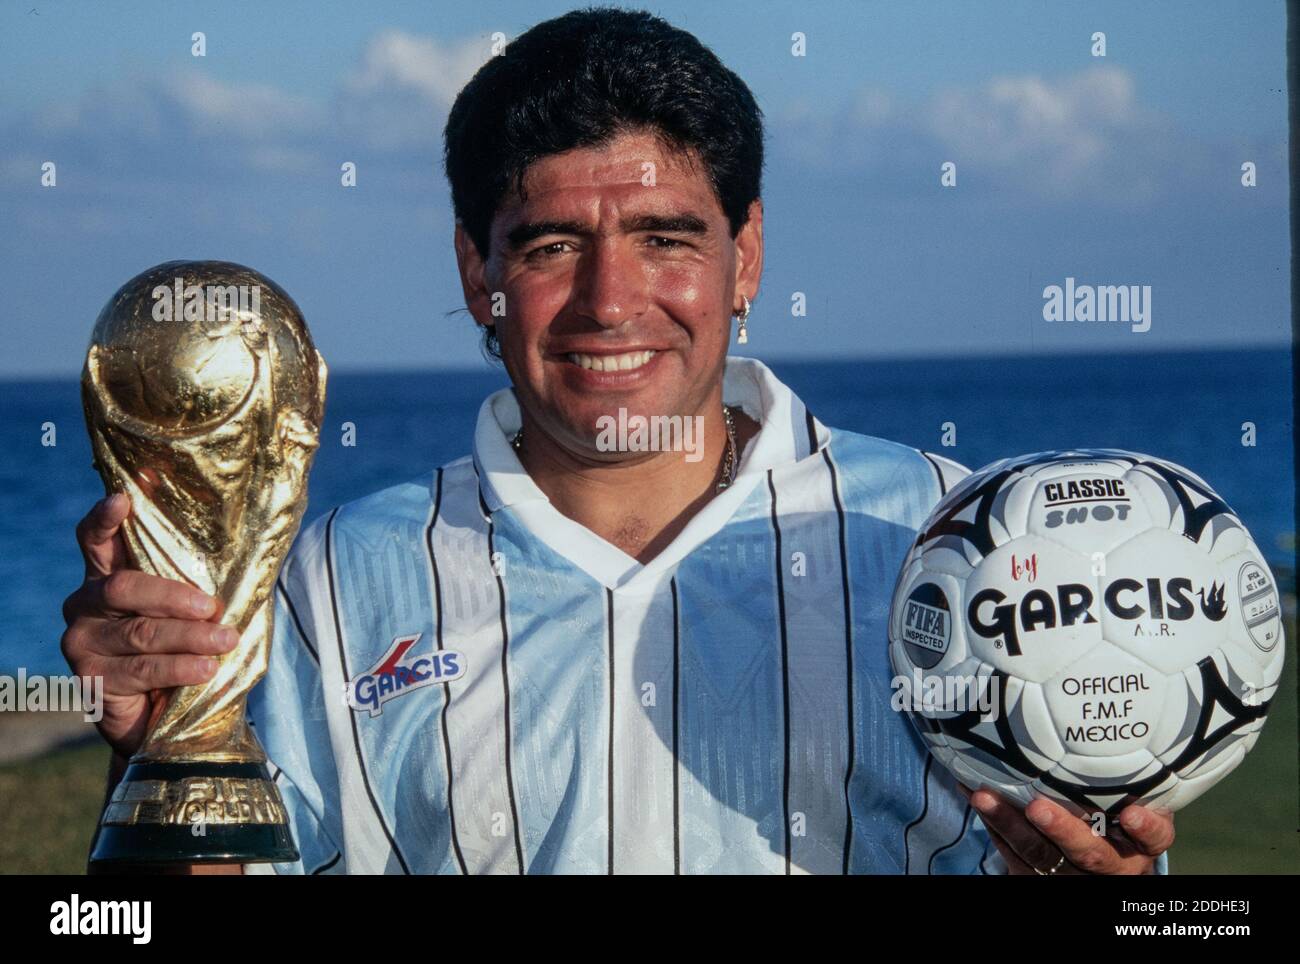 File:Maradona saccardi 1981.jpg - Wikimedia Commons